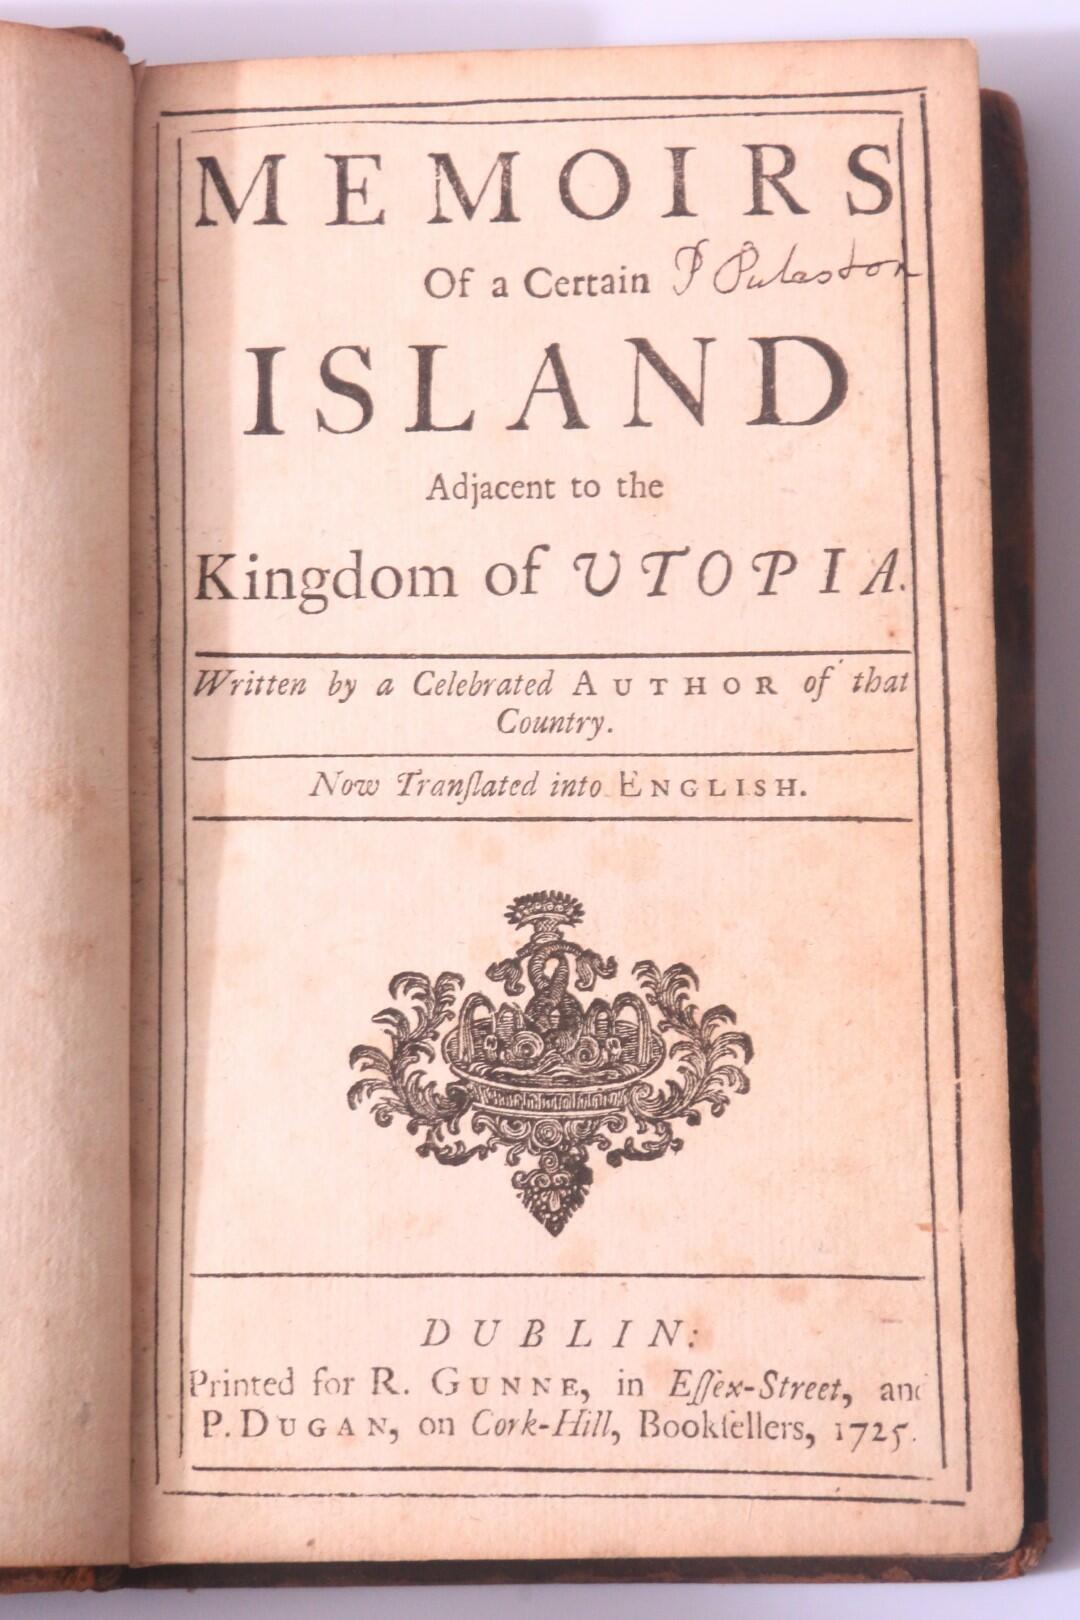 Eliza Haywood - Memoirs of a Certain Island Adjacent to the Kingdom of Utopia - R. Gunne & P. Dugan, 1725, First Edition.